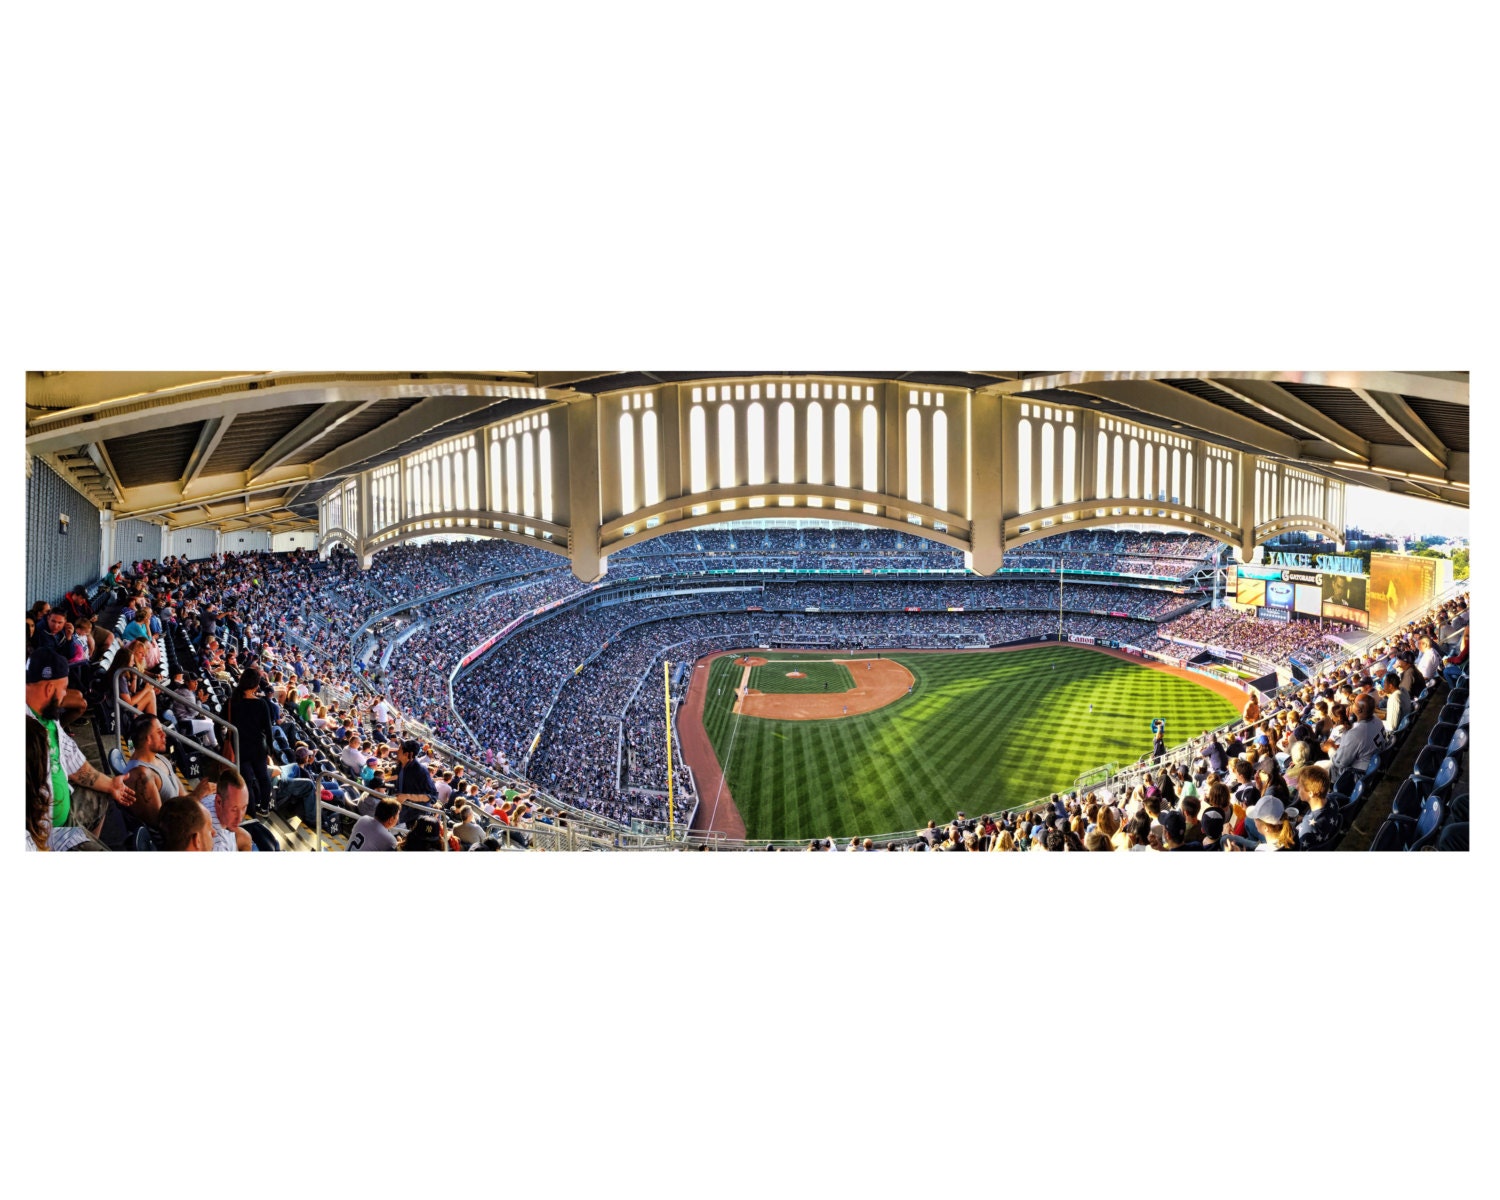 New York Yankees: Two Year Anniversary Of Derek Jeter's Final Game